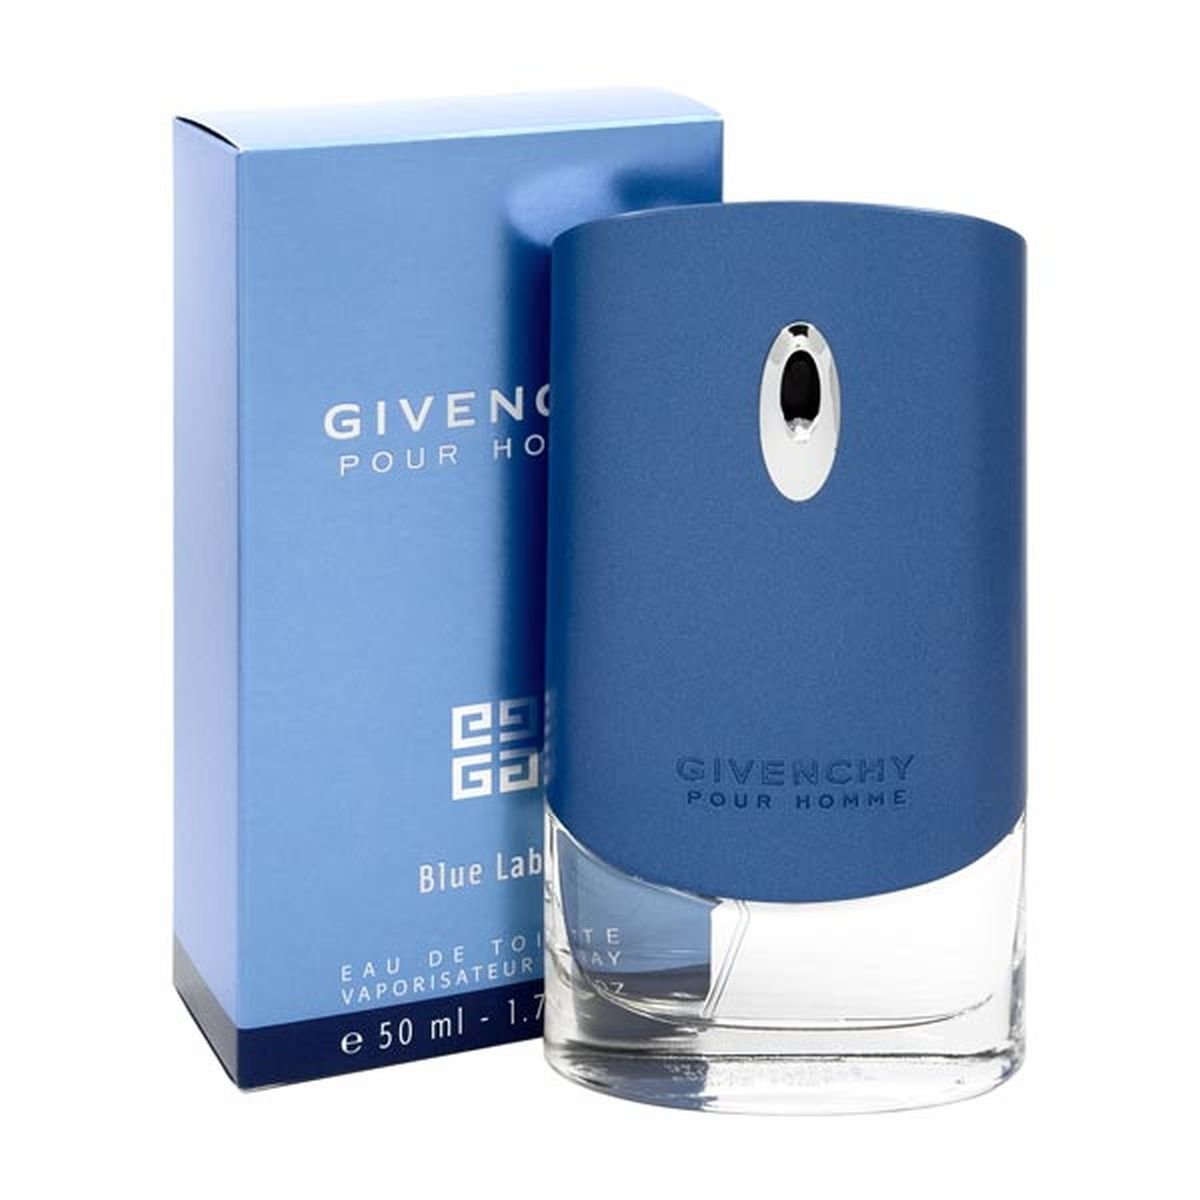 Givenchy pour homme оригинал. Givenchy Blue Label. Дживанши мужские Блю 50мл. Givenchy Blue Label 50. Givenchy Blue Label (мужские) 50ml.